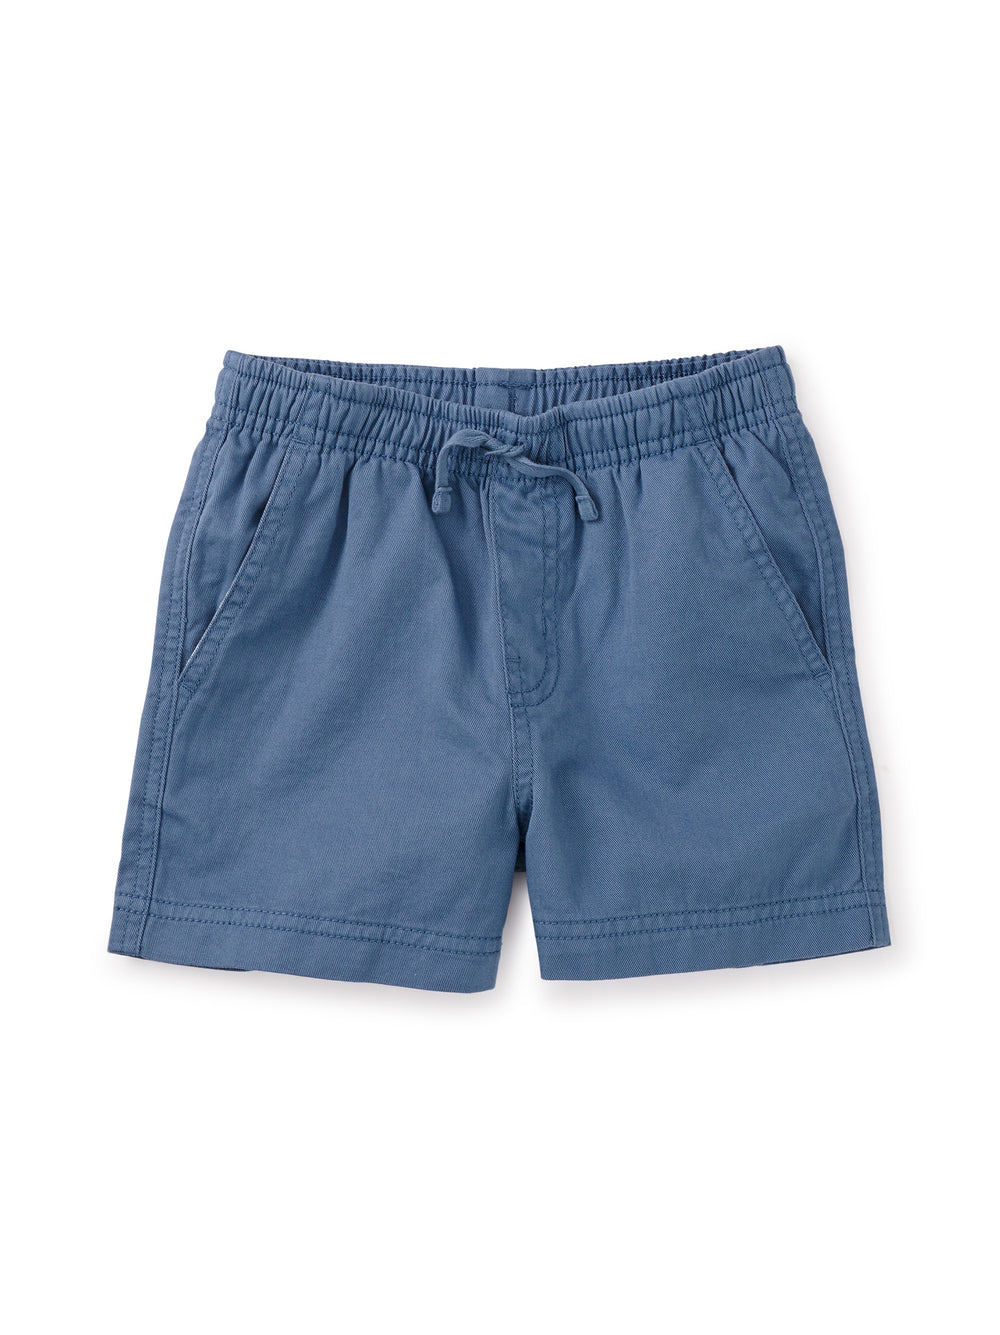 Tea Collection Twill Sport Shorts - Coronet Blue